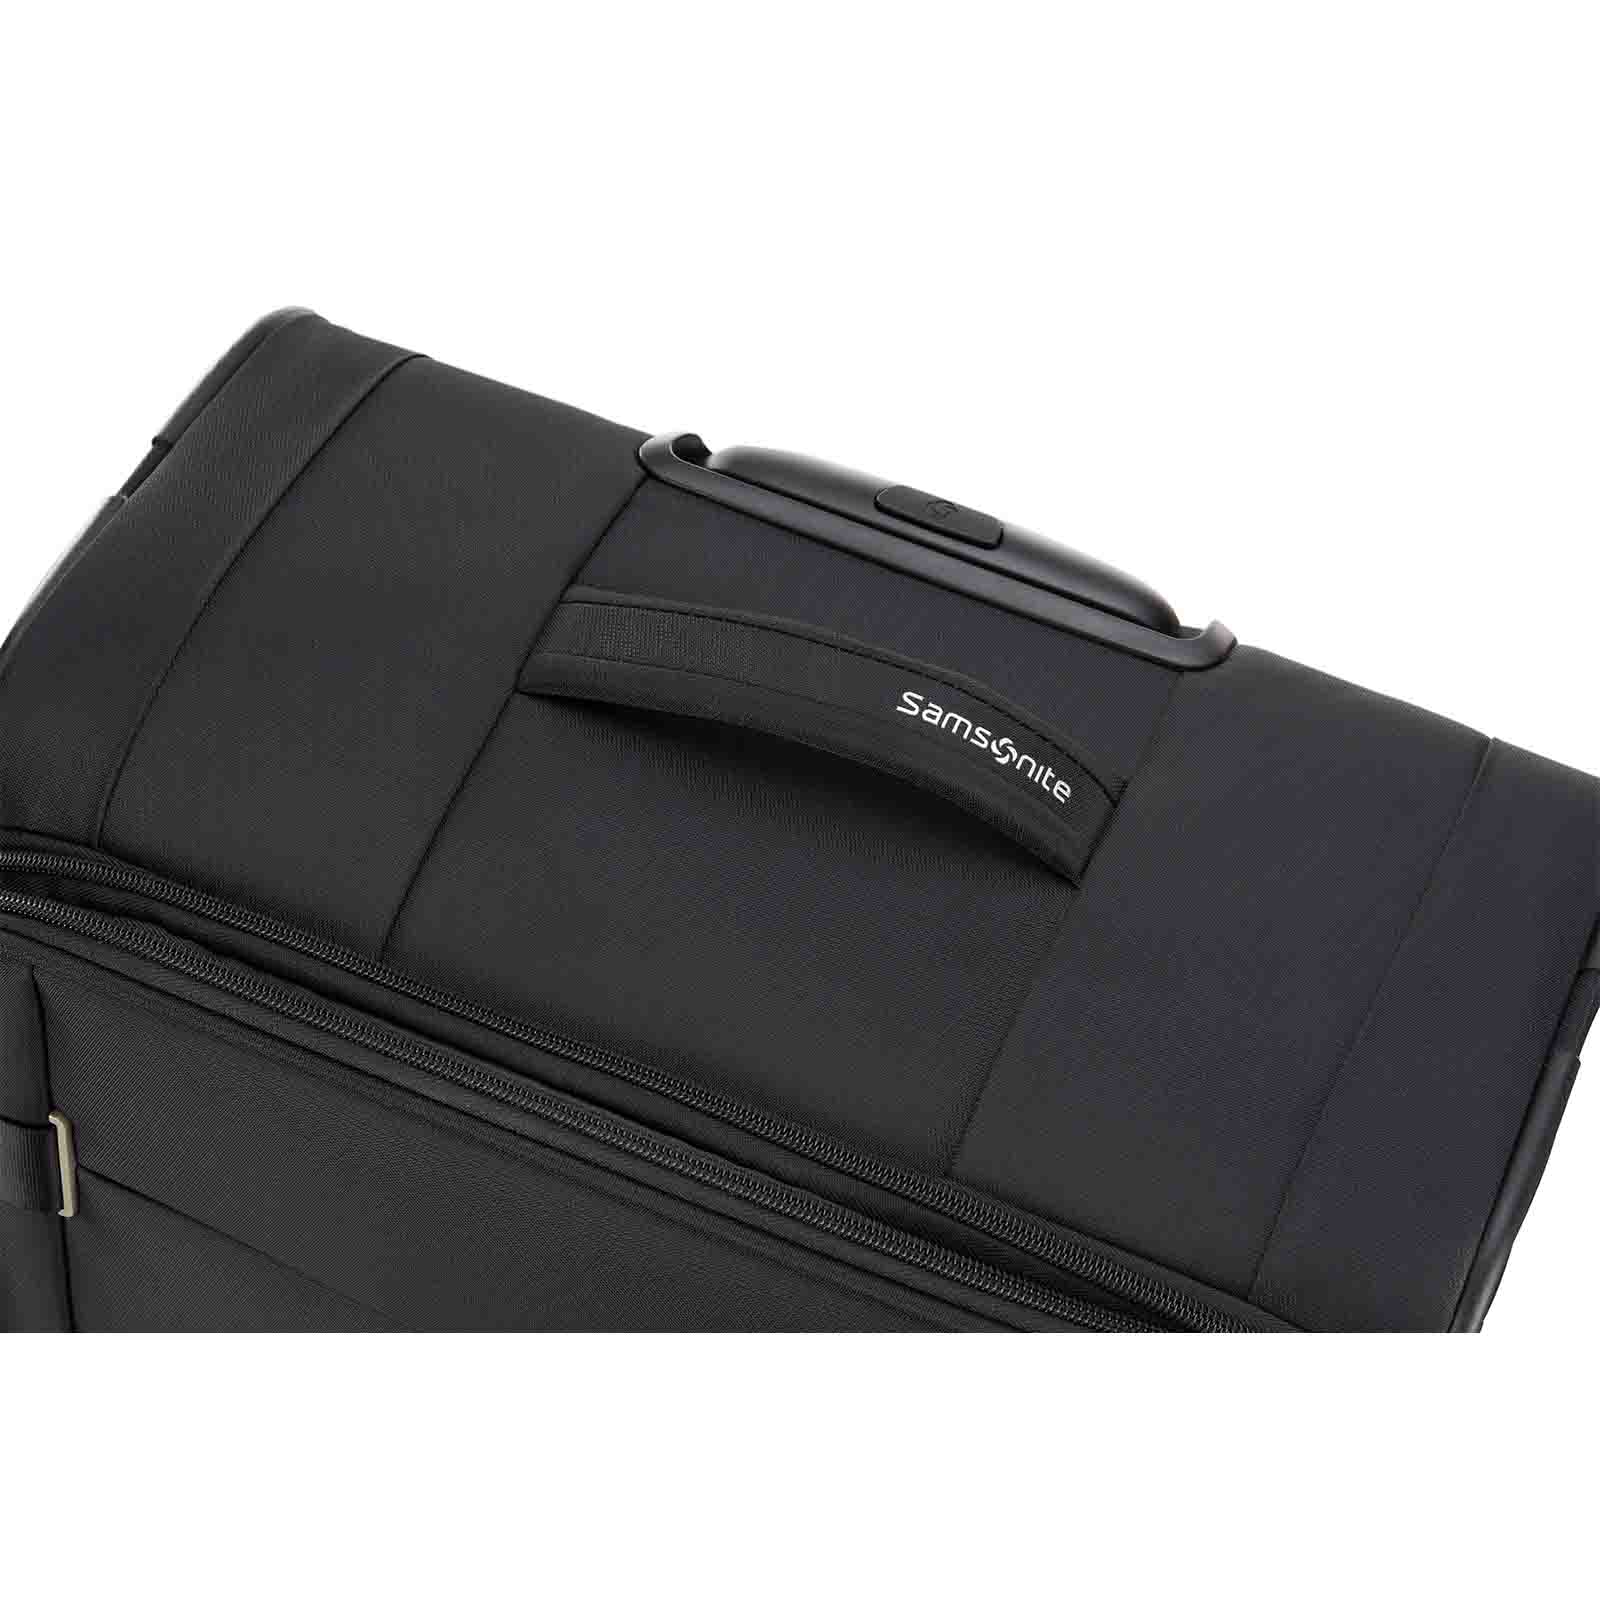 Samsonite-City-Rhythm-71cm-Suitcase-Black-Handle